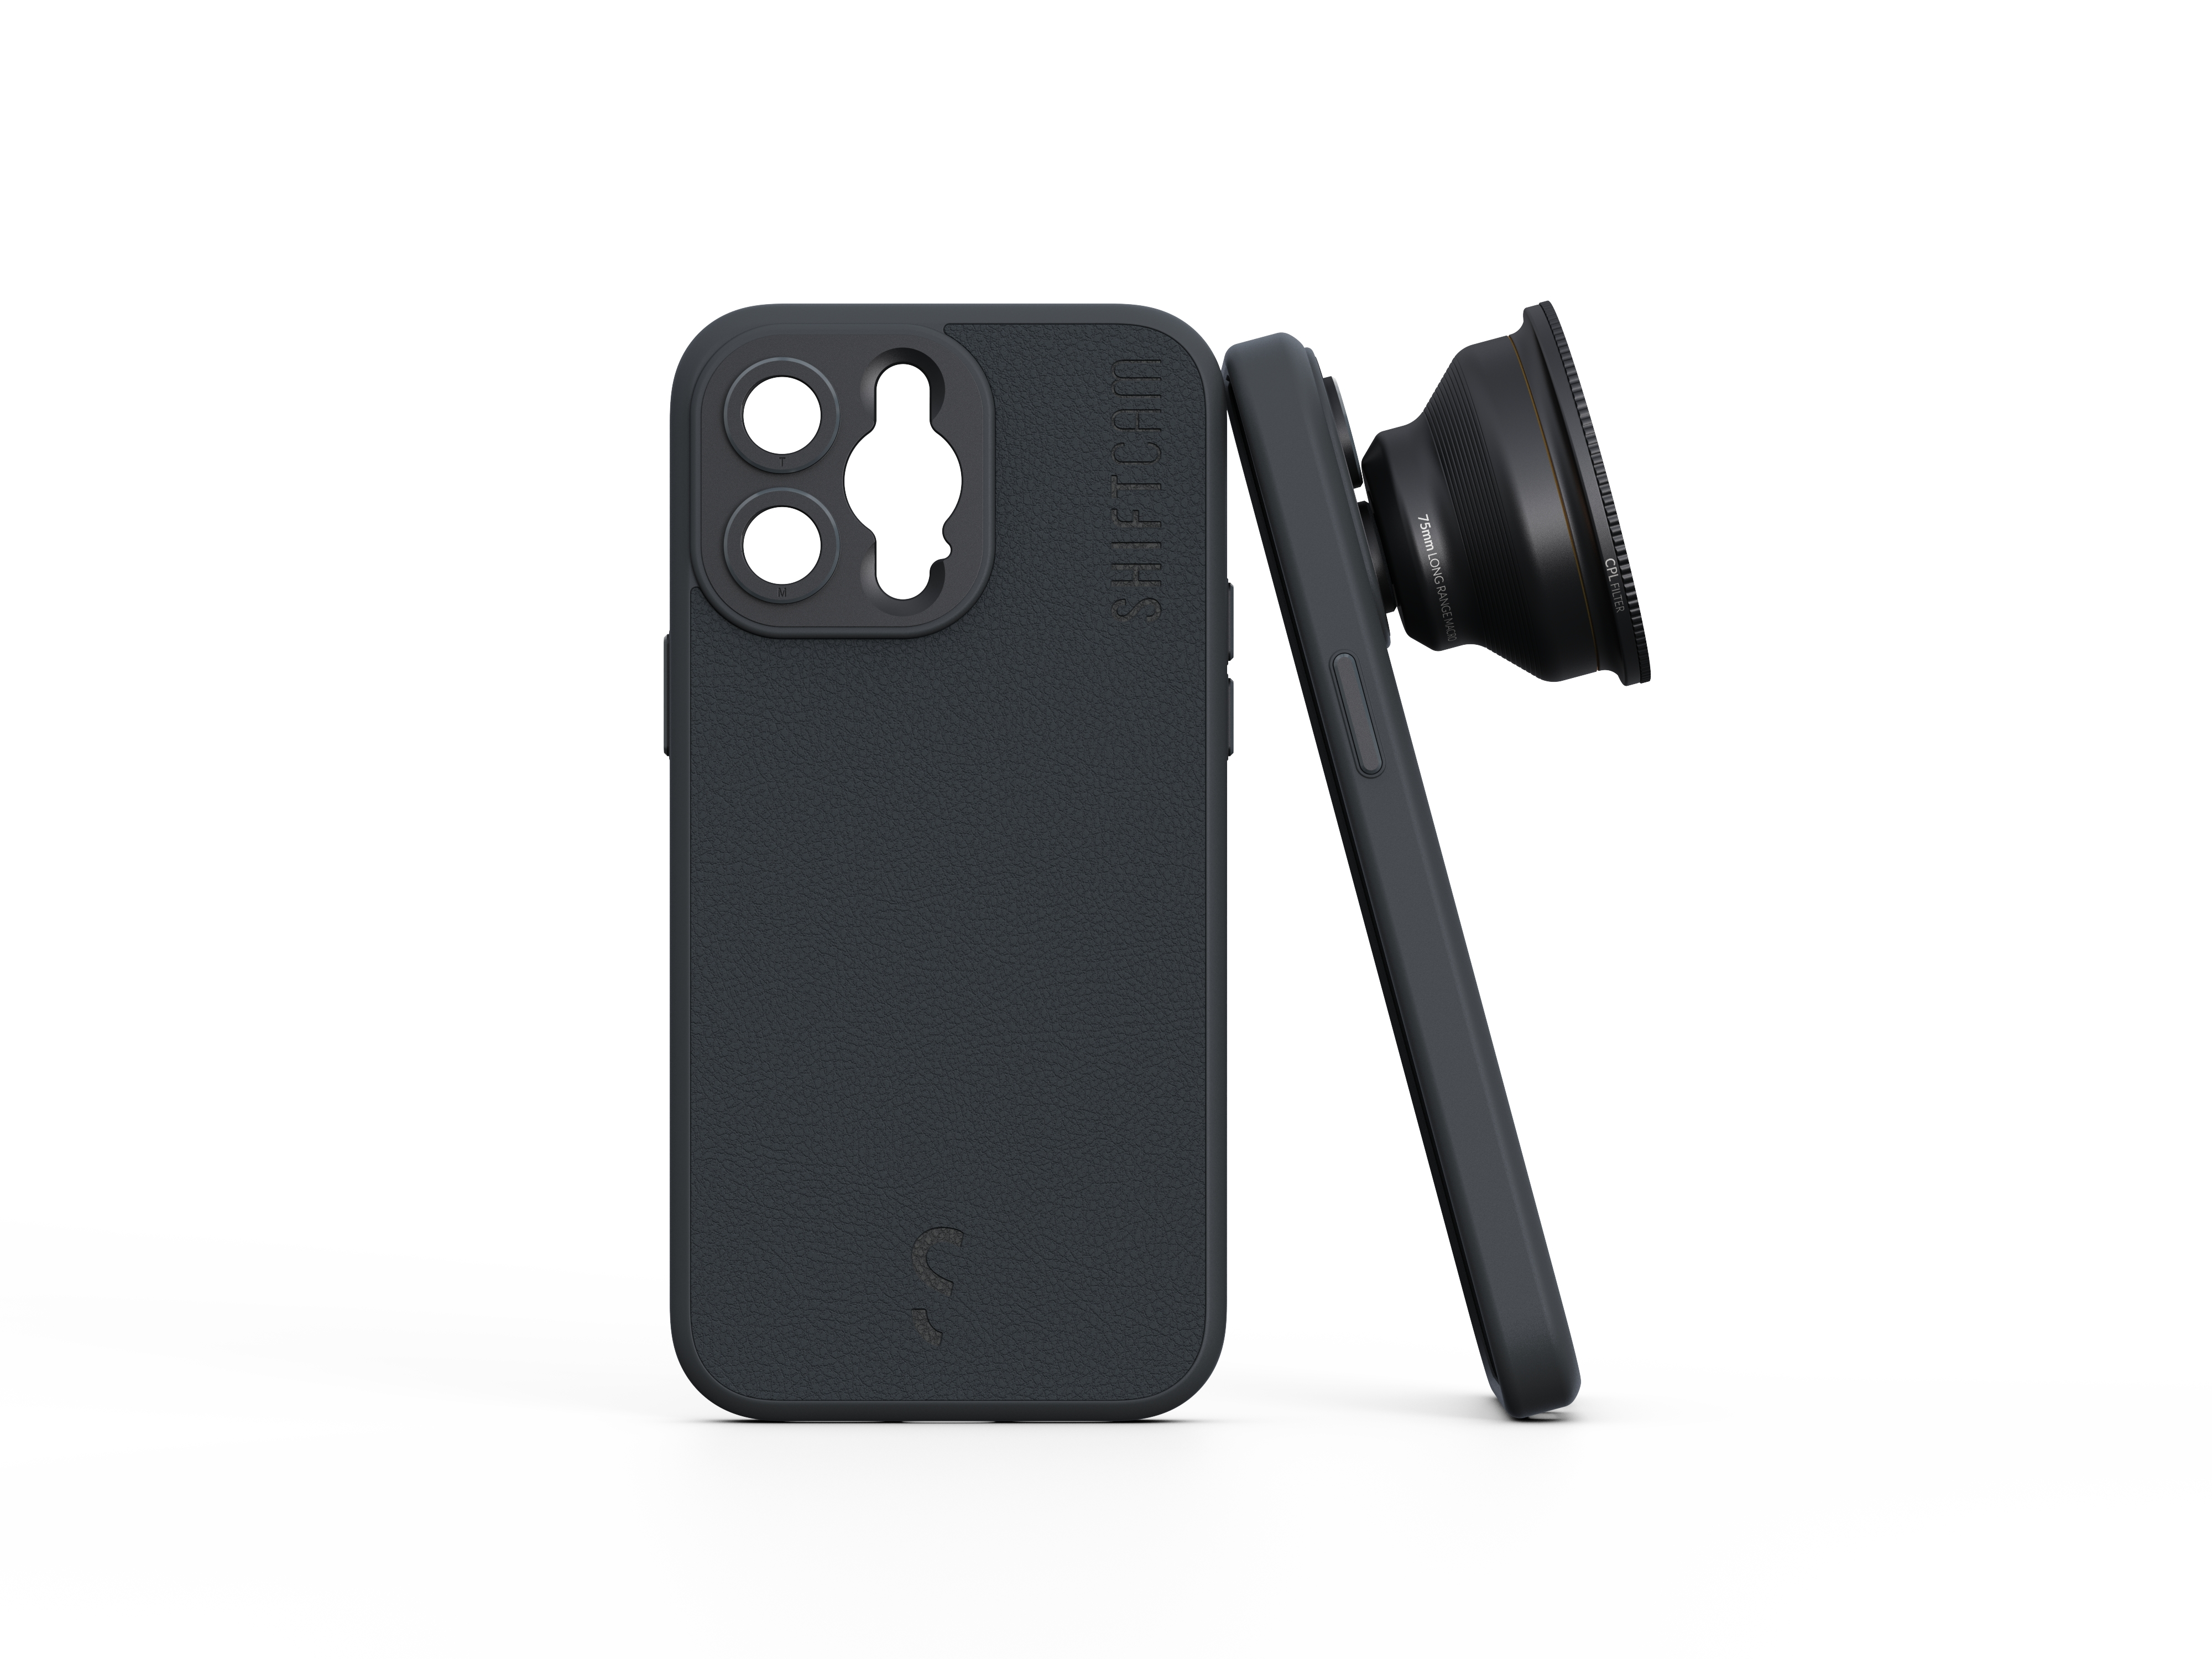 SHIFTCAM LensUltra 75mm Objektiv - Smartphone - Macro Long (Smartphone Makroobjektiv Range T2-Mount für